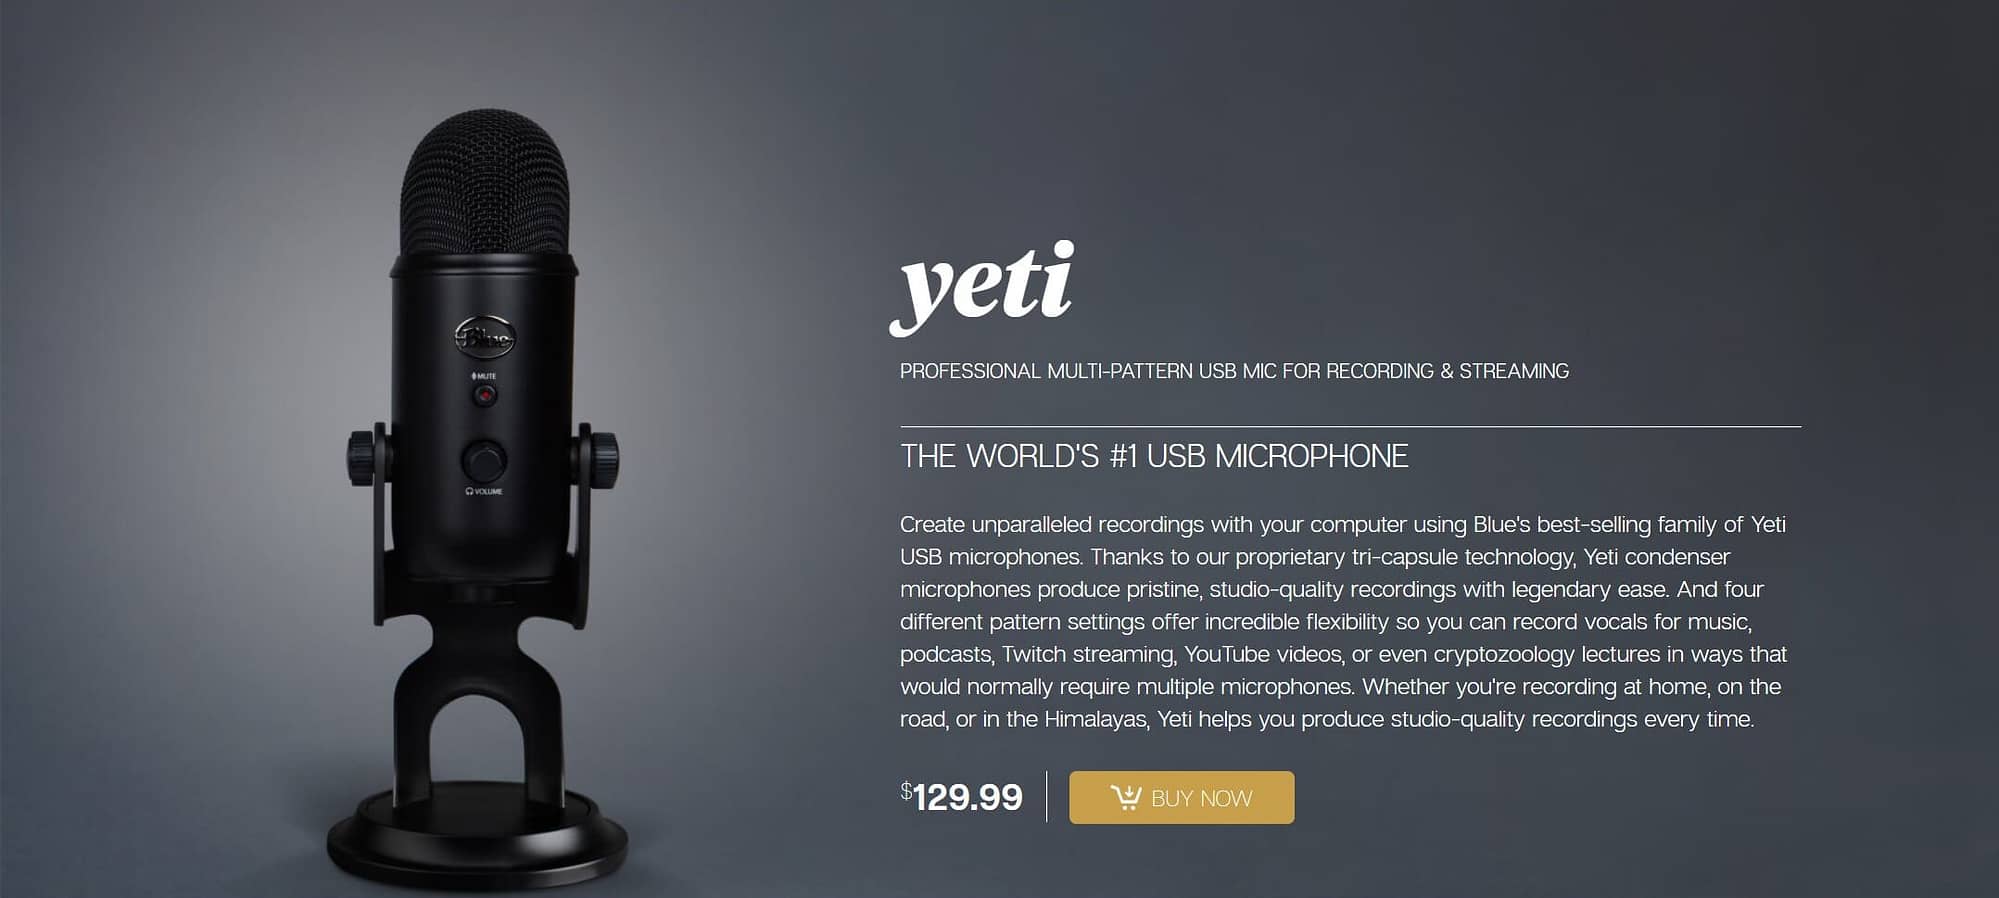 The Blue Yeti microphone.